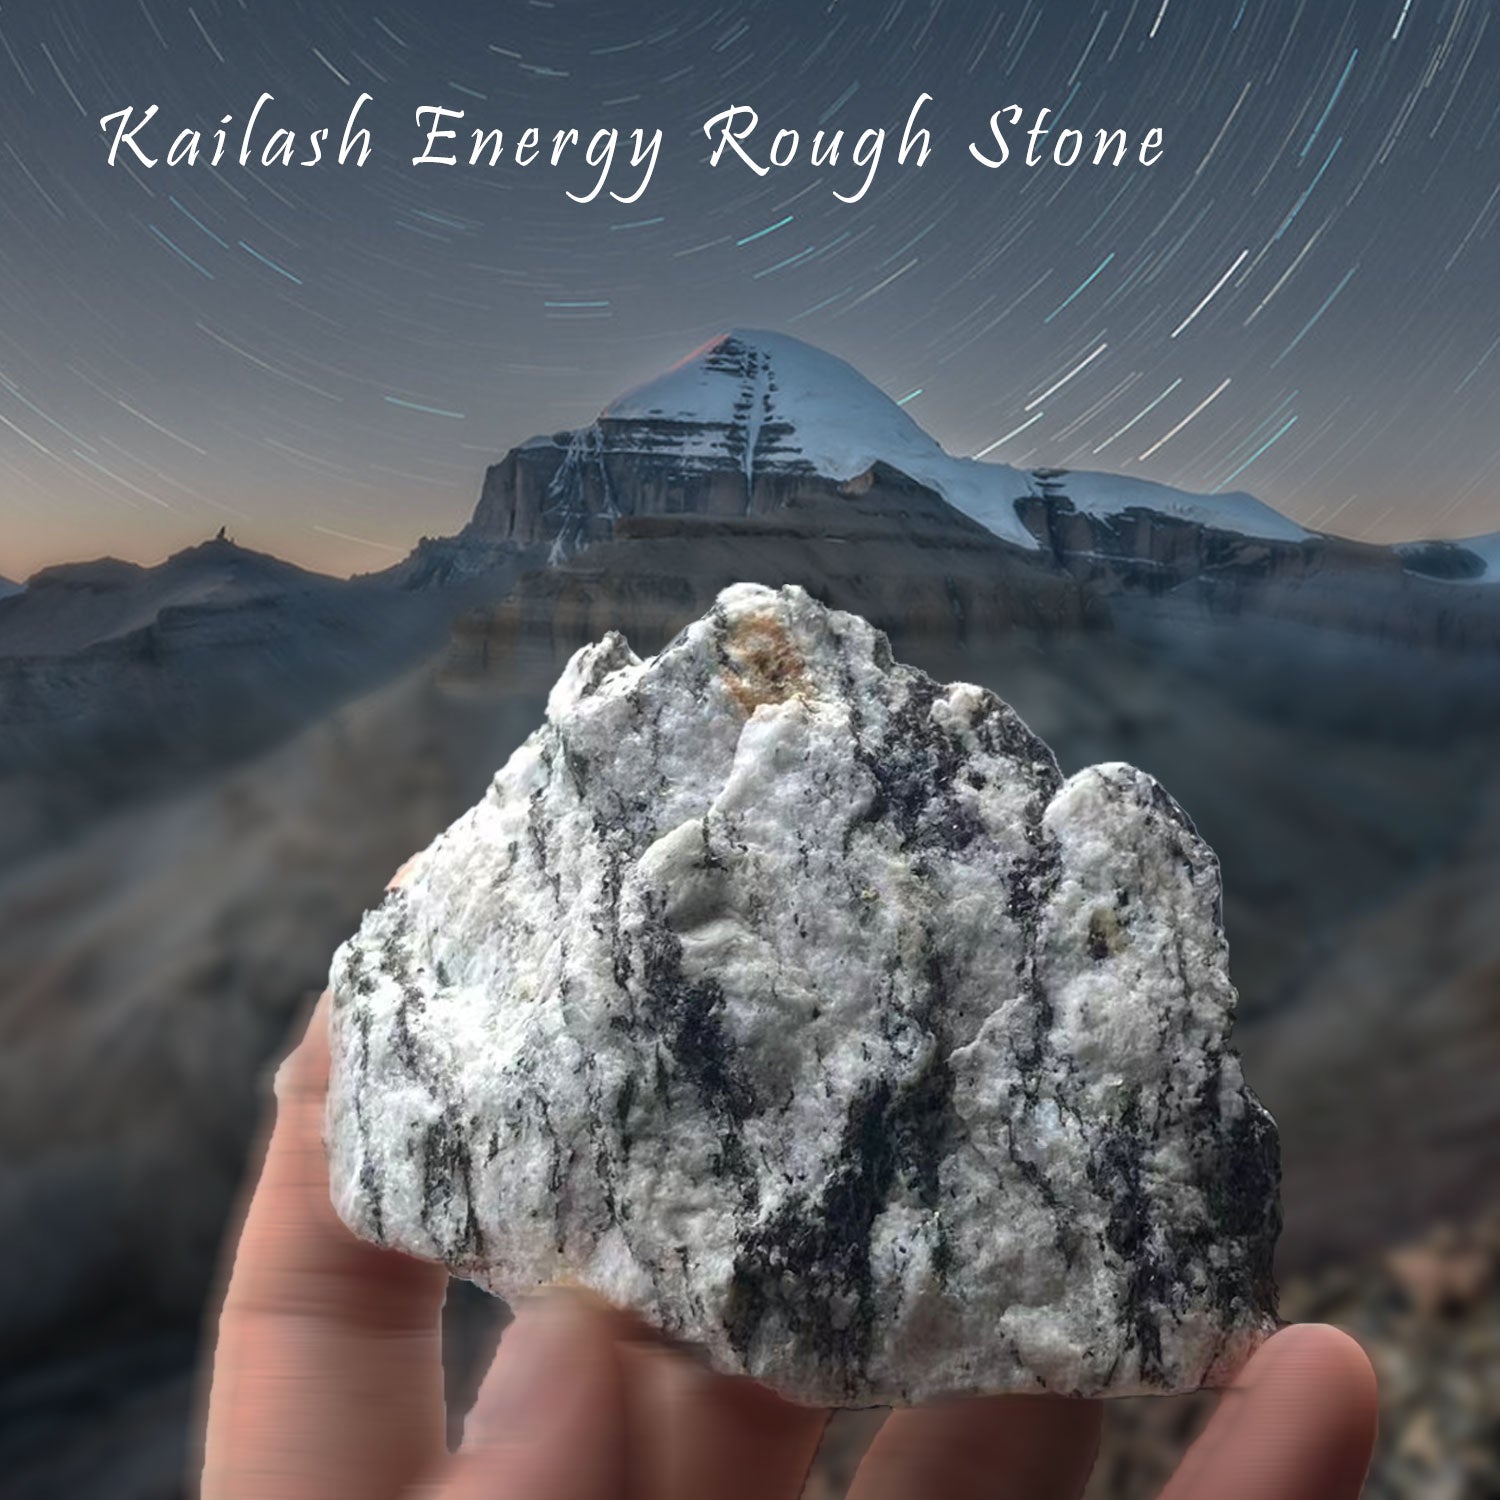 Purification Stone Energy blessing stone from Kailash